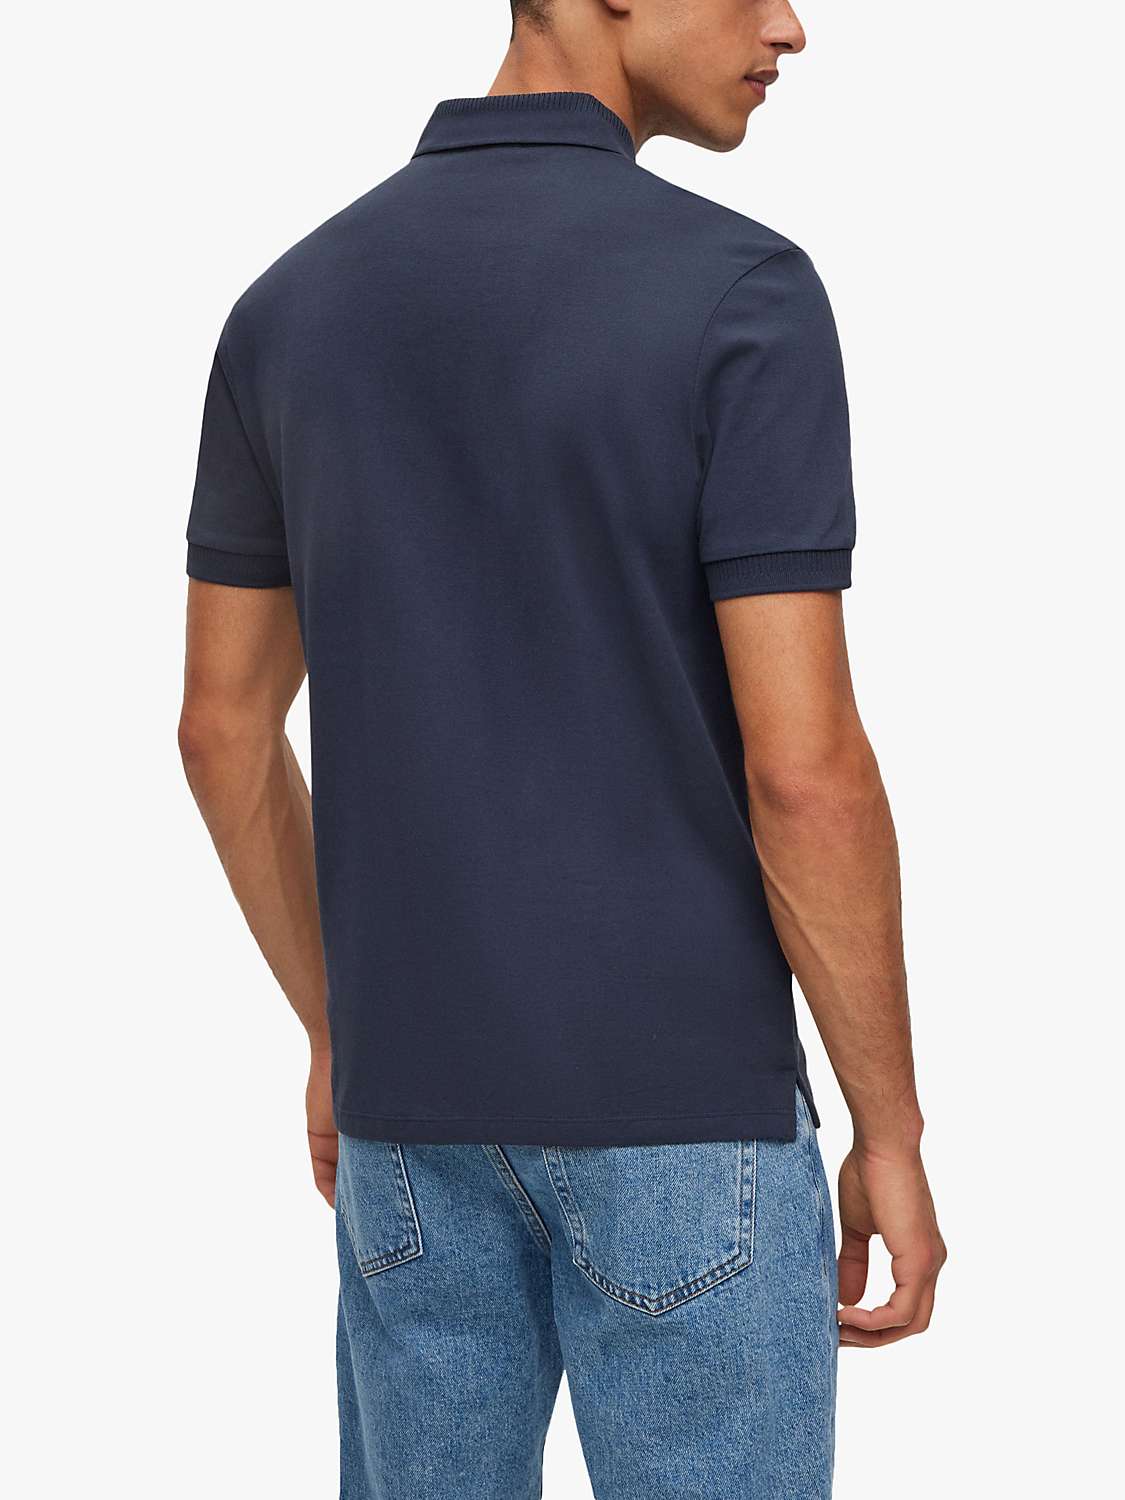 Buy HUGO Dereso Cotton Polo Shirt, Navy Online at johnlewis.com